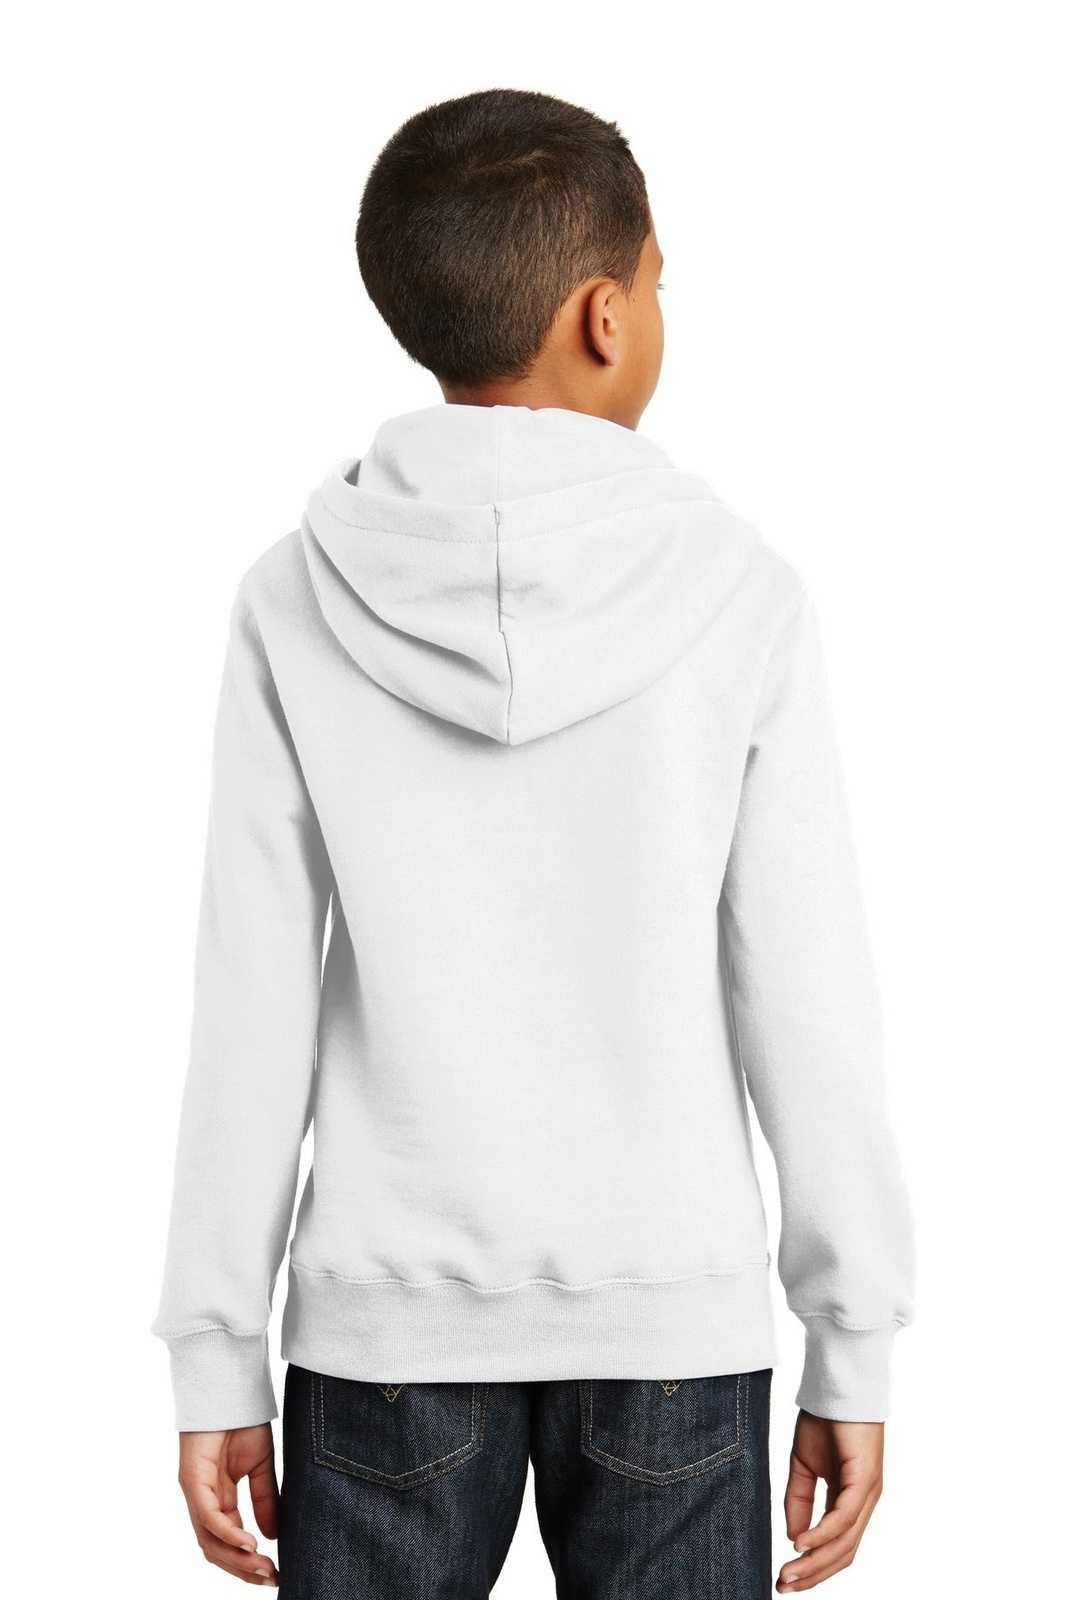 Port &amp; Company PC850YH Youth Fan Favorite Fleece Pullover Hooded Sweatshirt - White - HIT a Double - 2